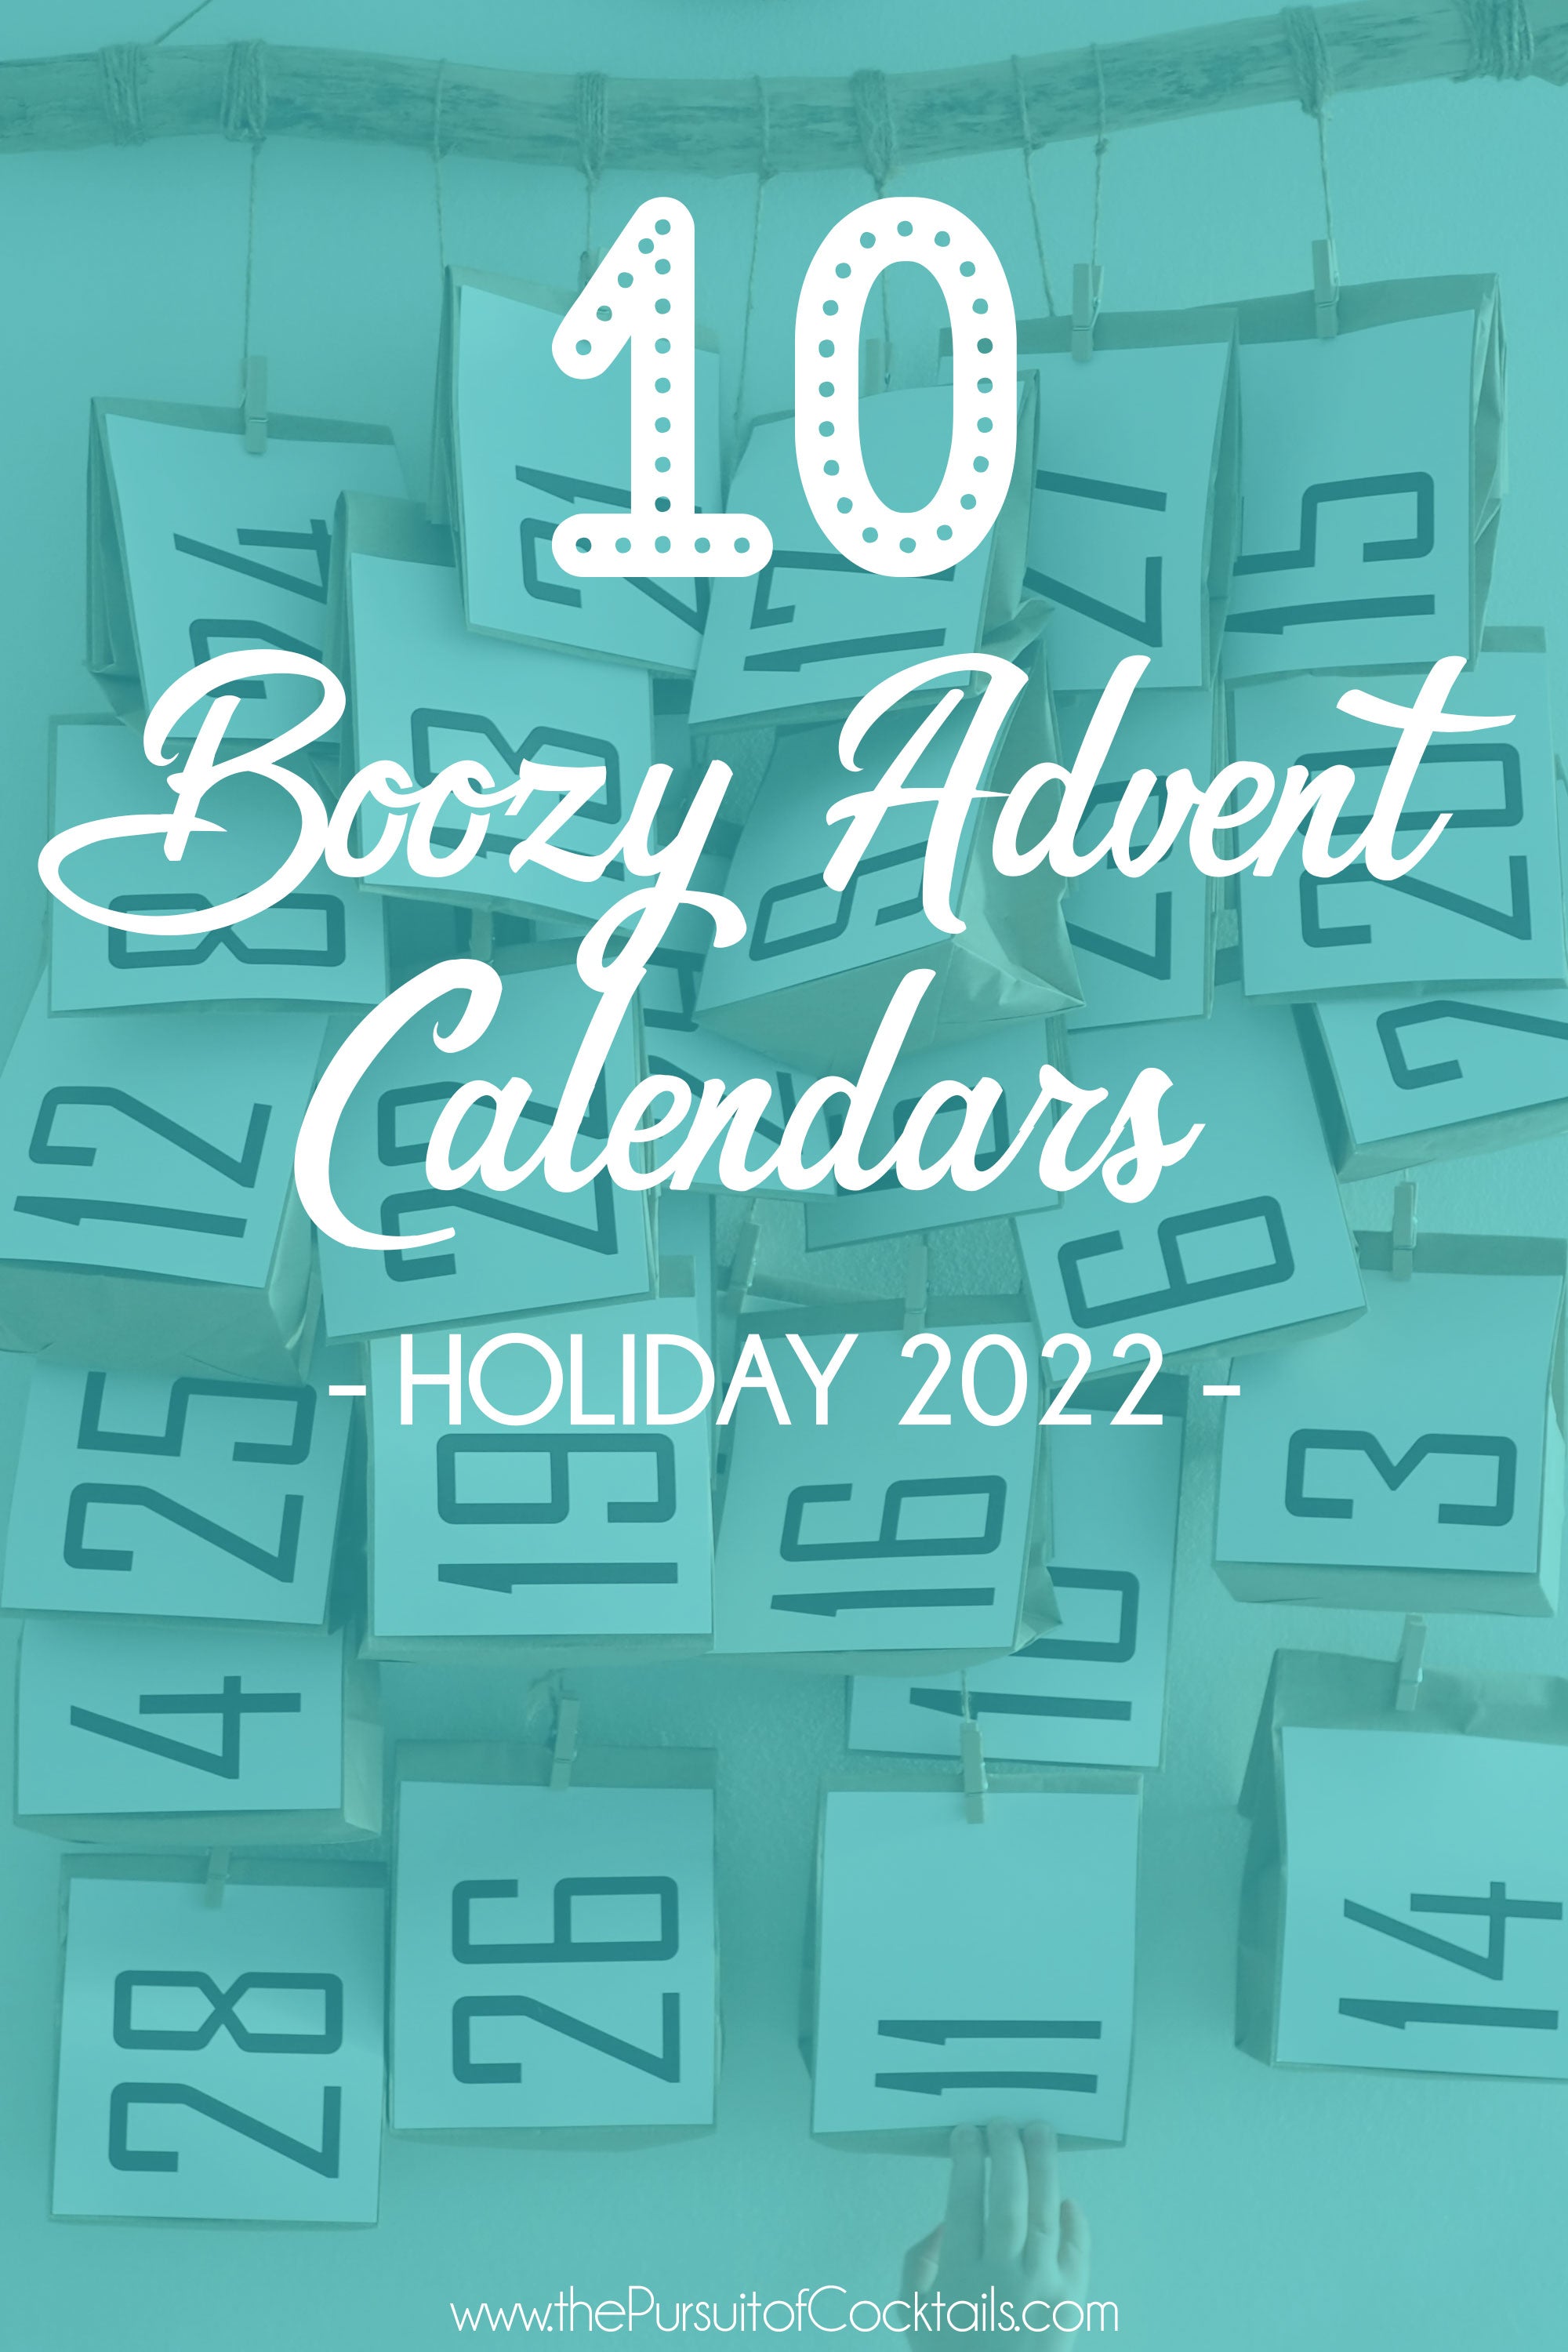 10 Boozy, alcohol-themed advent calendars for 2022